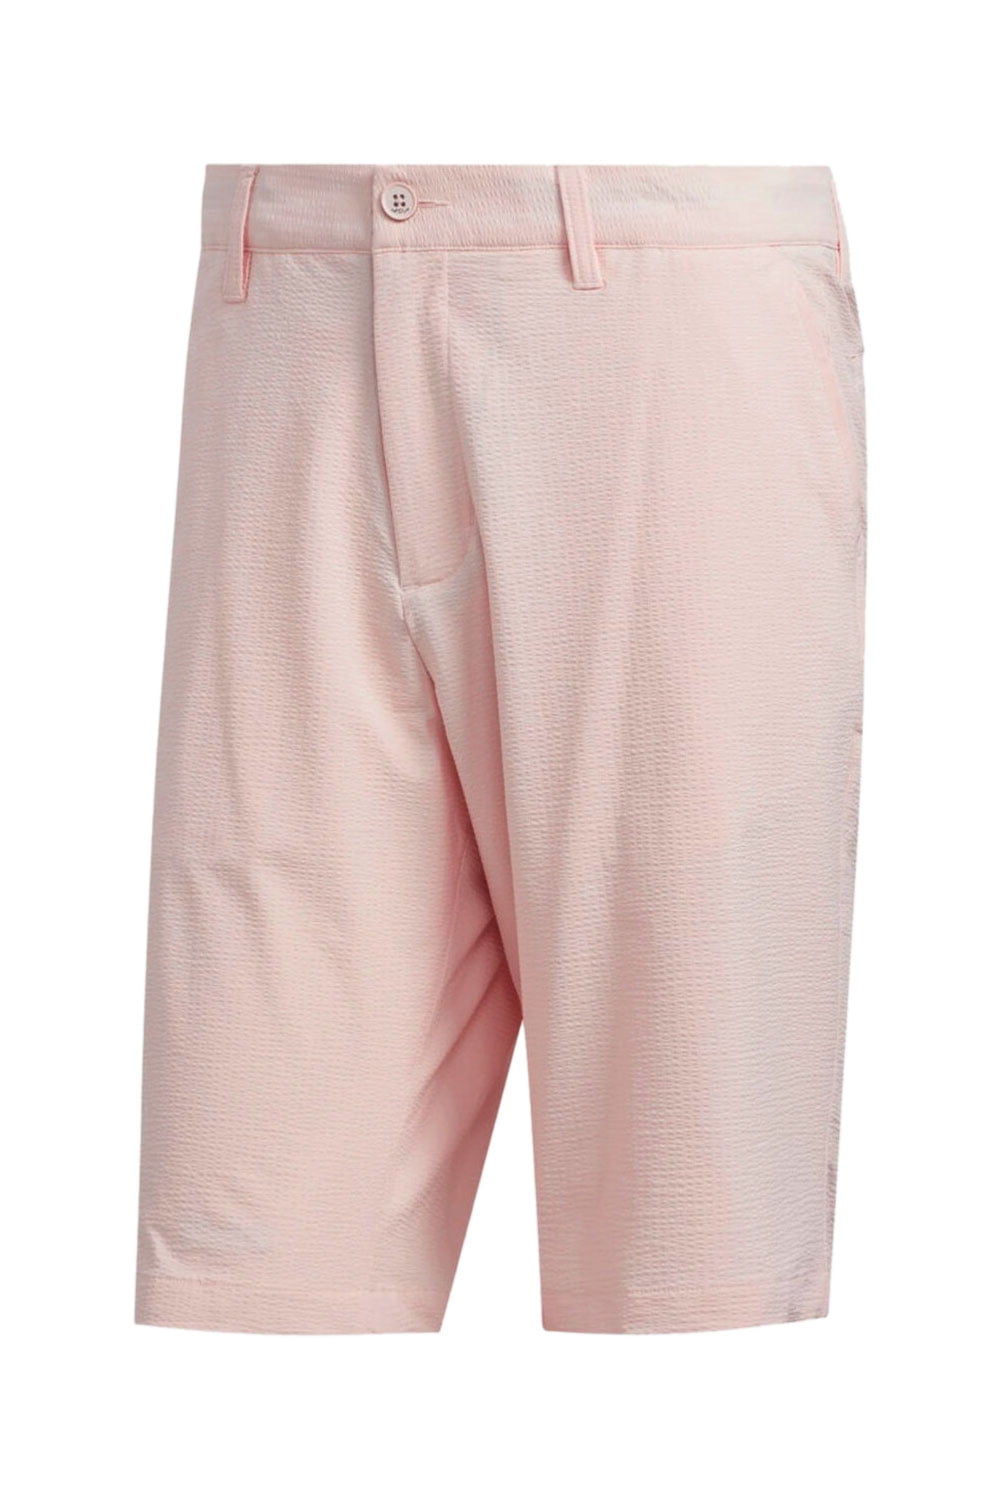 Adidas Mens AdiPure Seersucker Shorts 34 Icey Pink - NWT Walmart.com